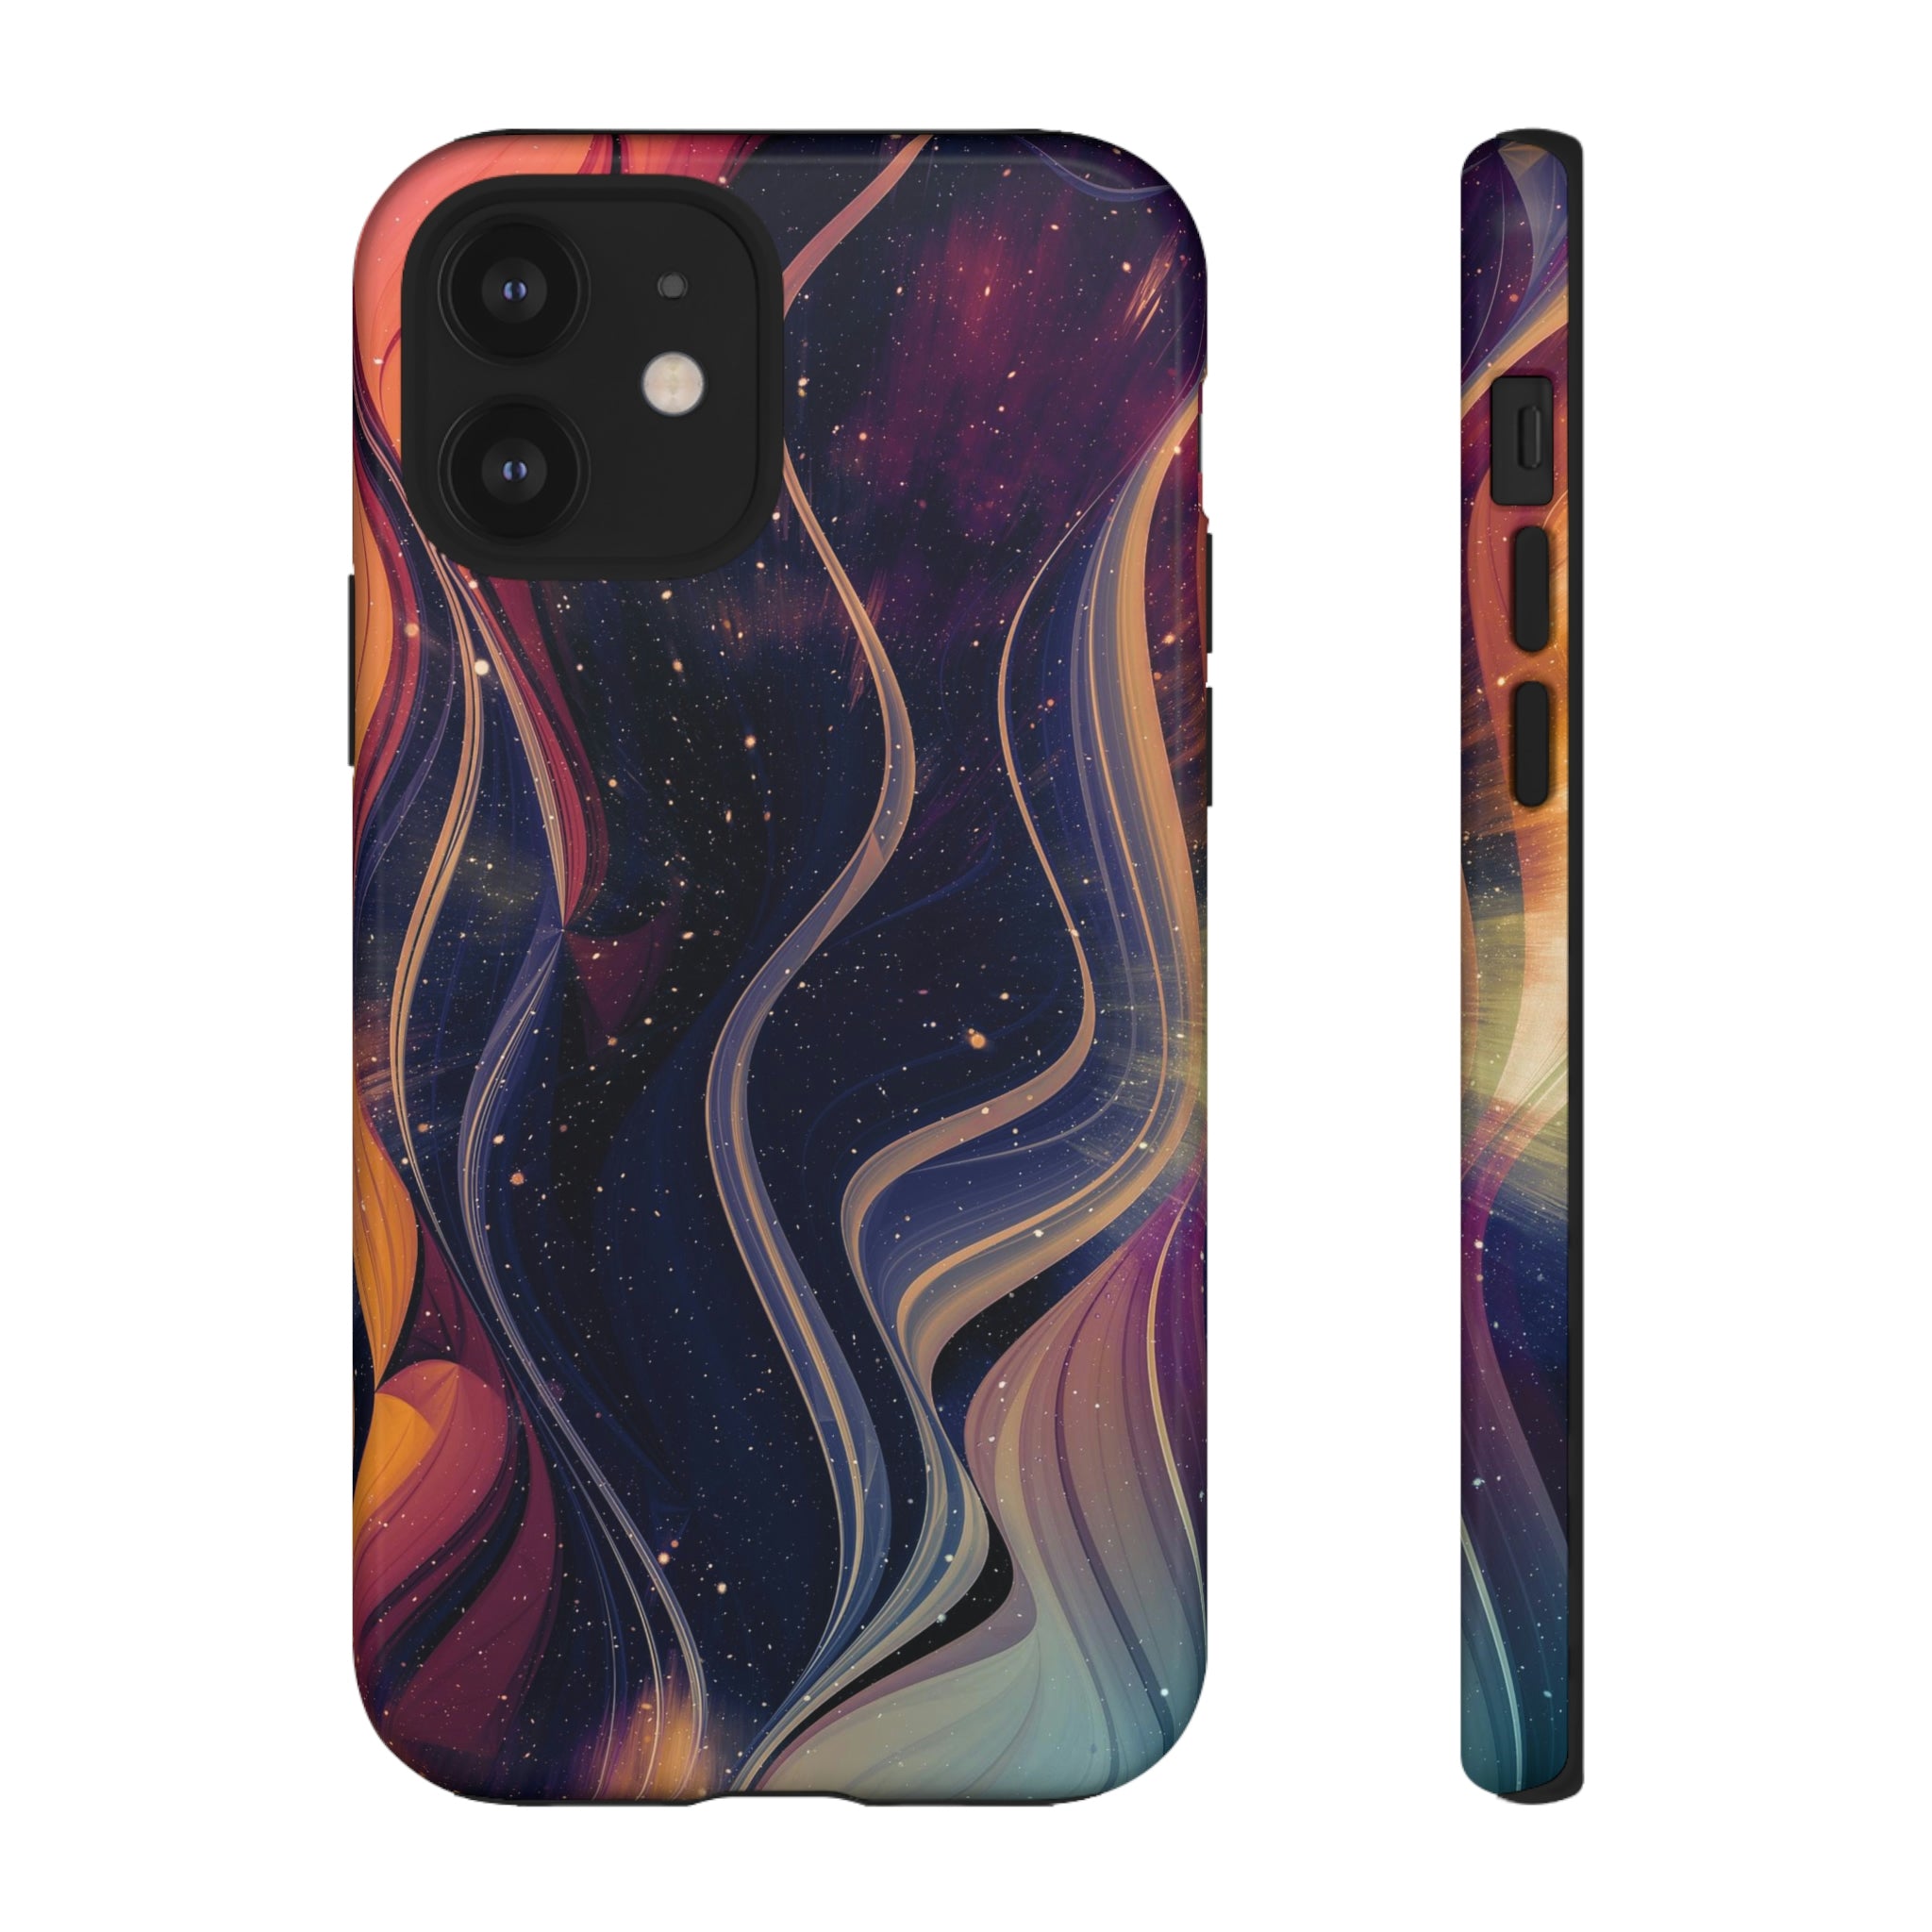 Smokey Cosmos - Dual Layered, Full Body, Armored Phone Case for iPhone 13/Samsung Galaxy S22/Google Pixel 6Smartphone CasesStreamLiteStreamLite